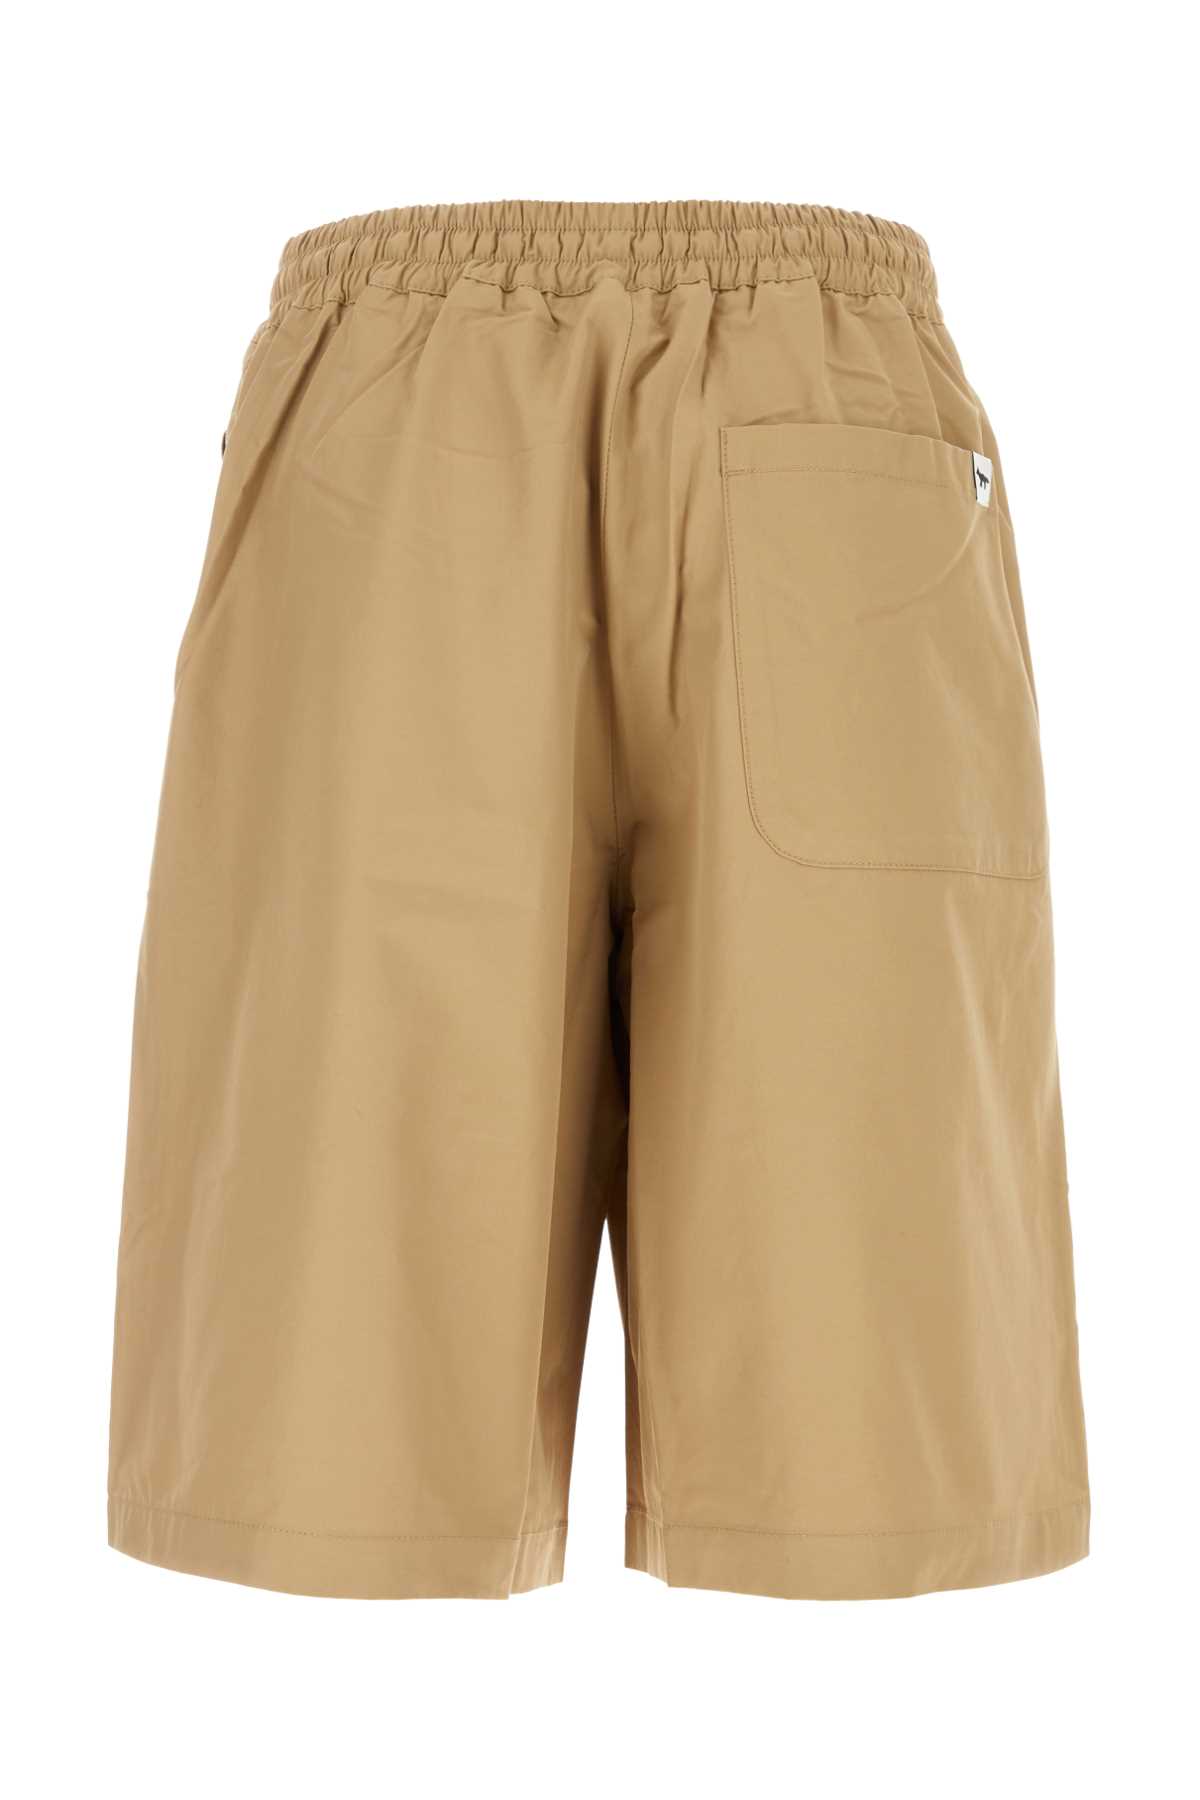 Maison Kitsuné Camel Cotton Blend Bermuda Shorts In P220